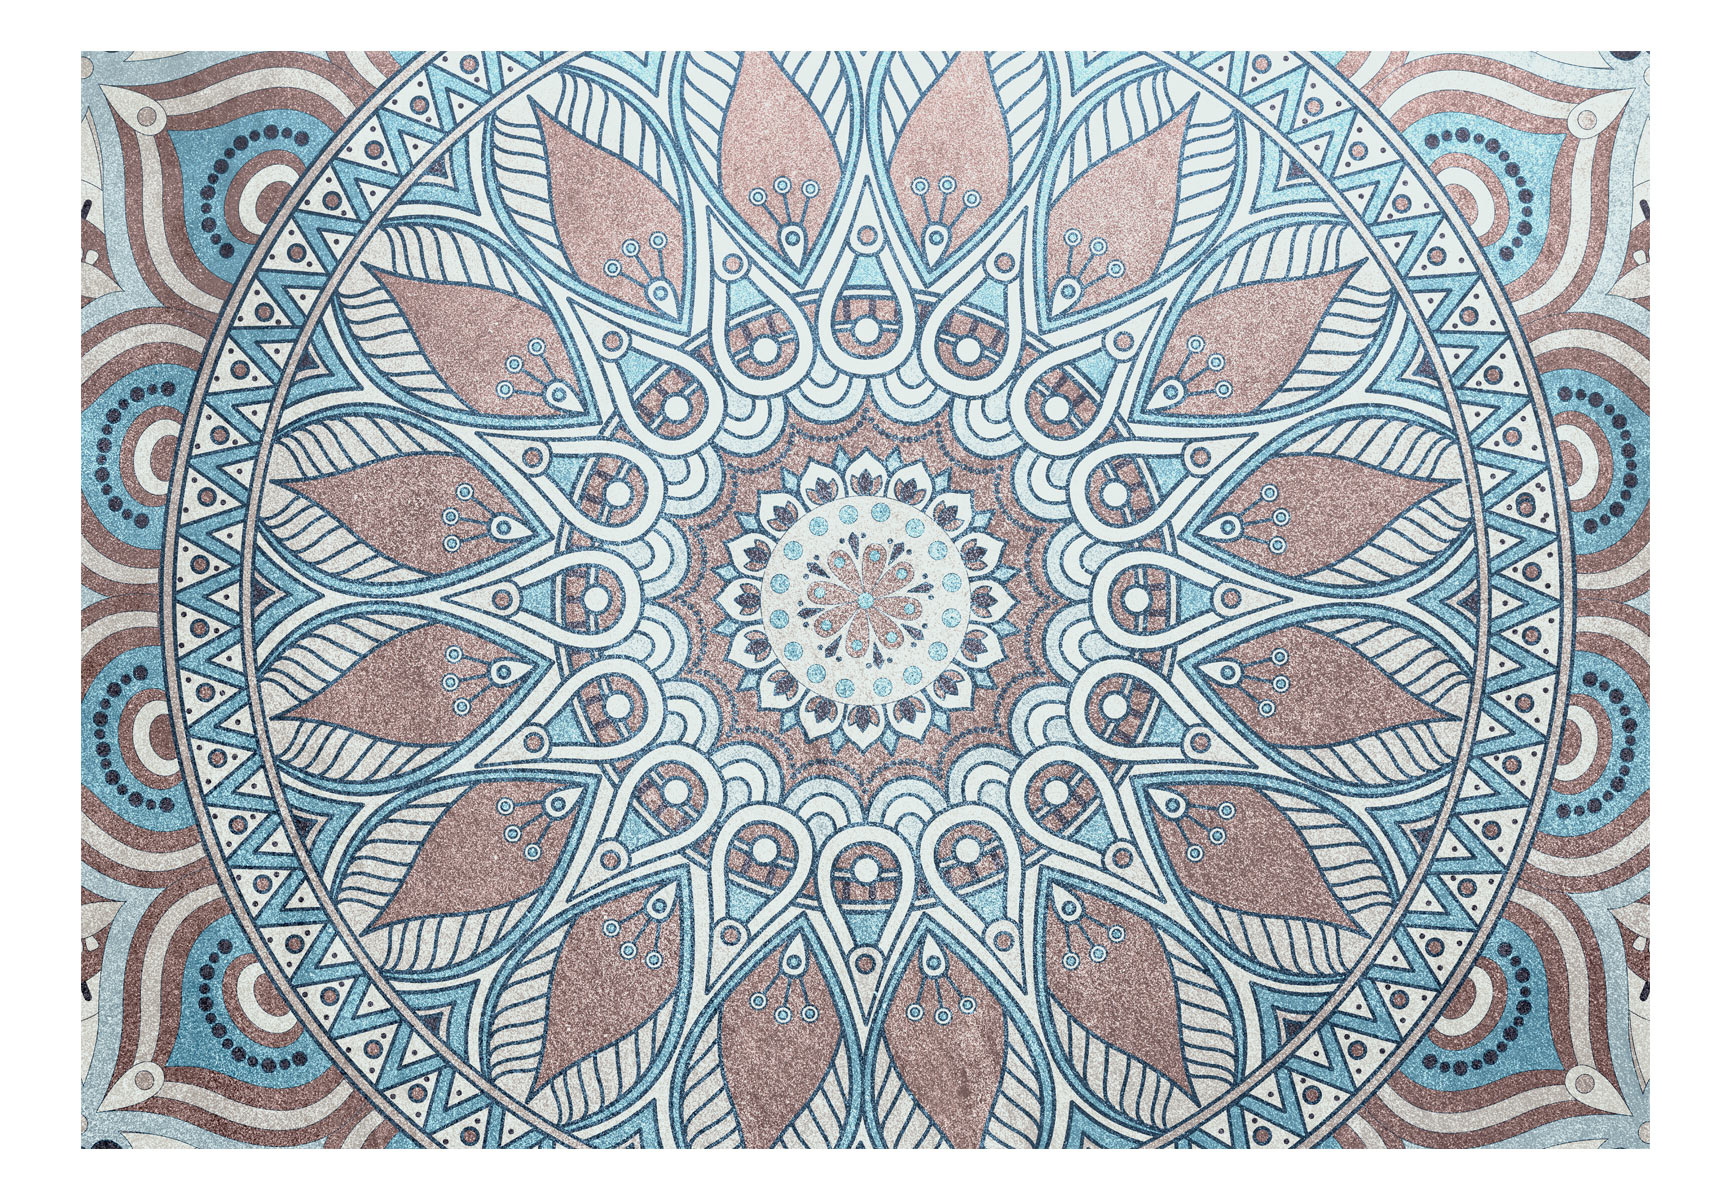 Zelfklevend fotobehang - Prachtige Mandala, Premium print